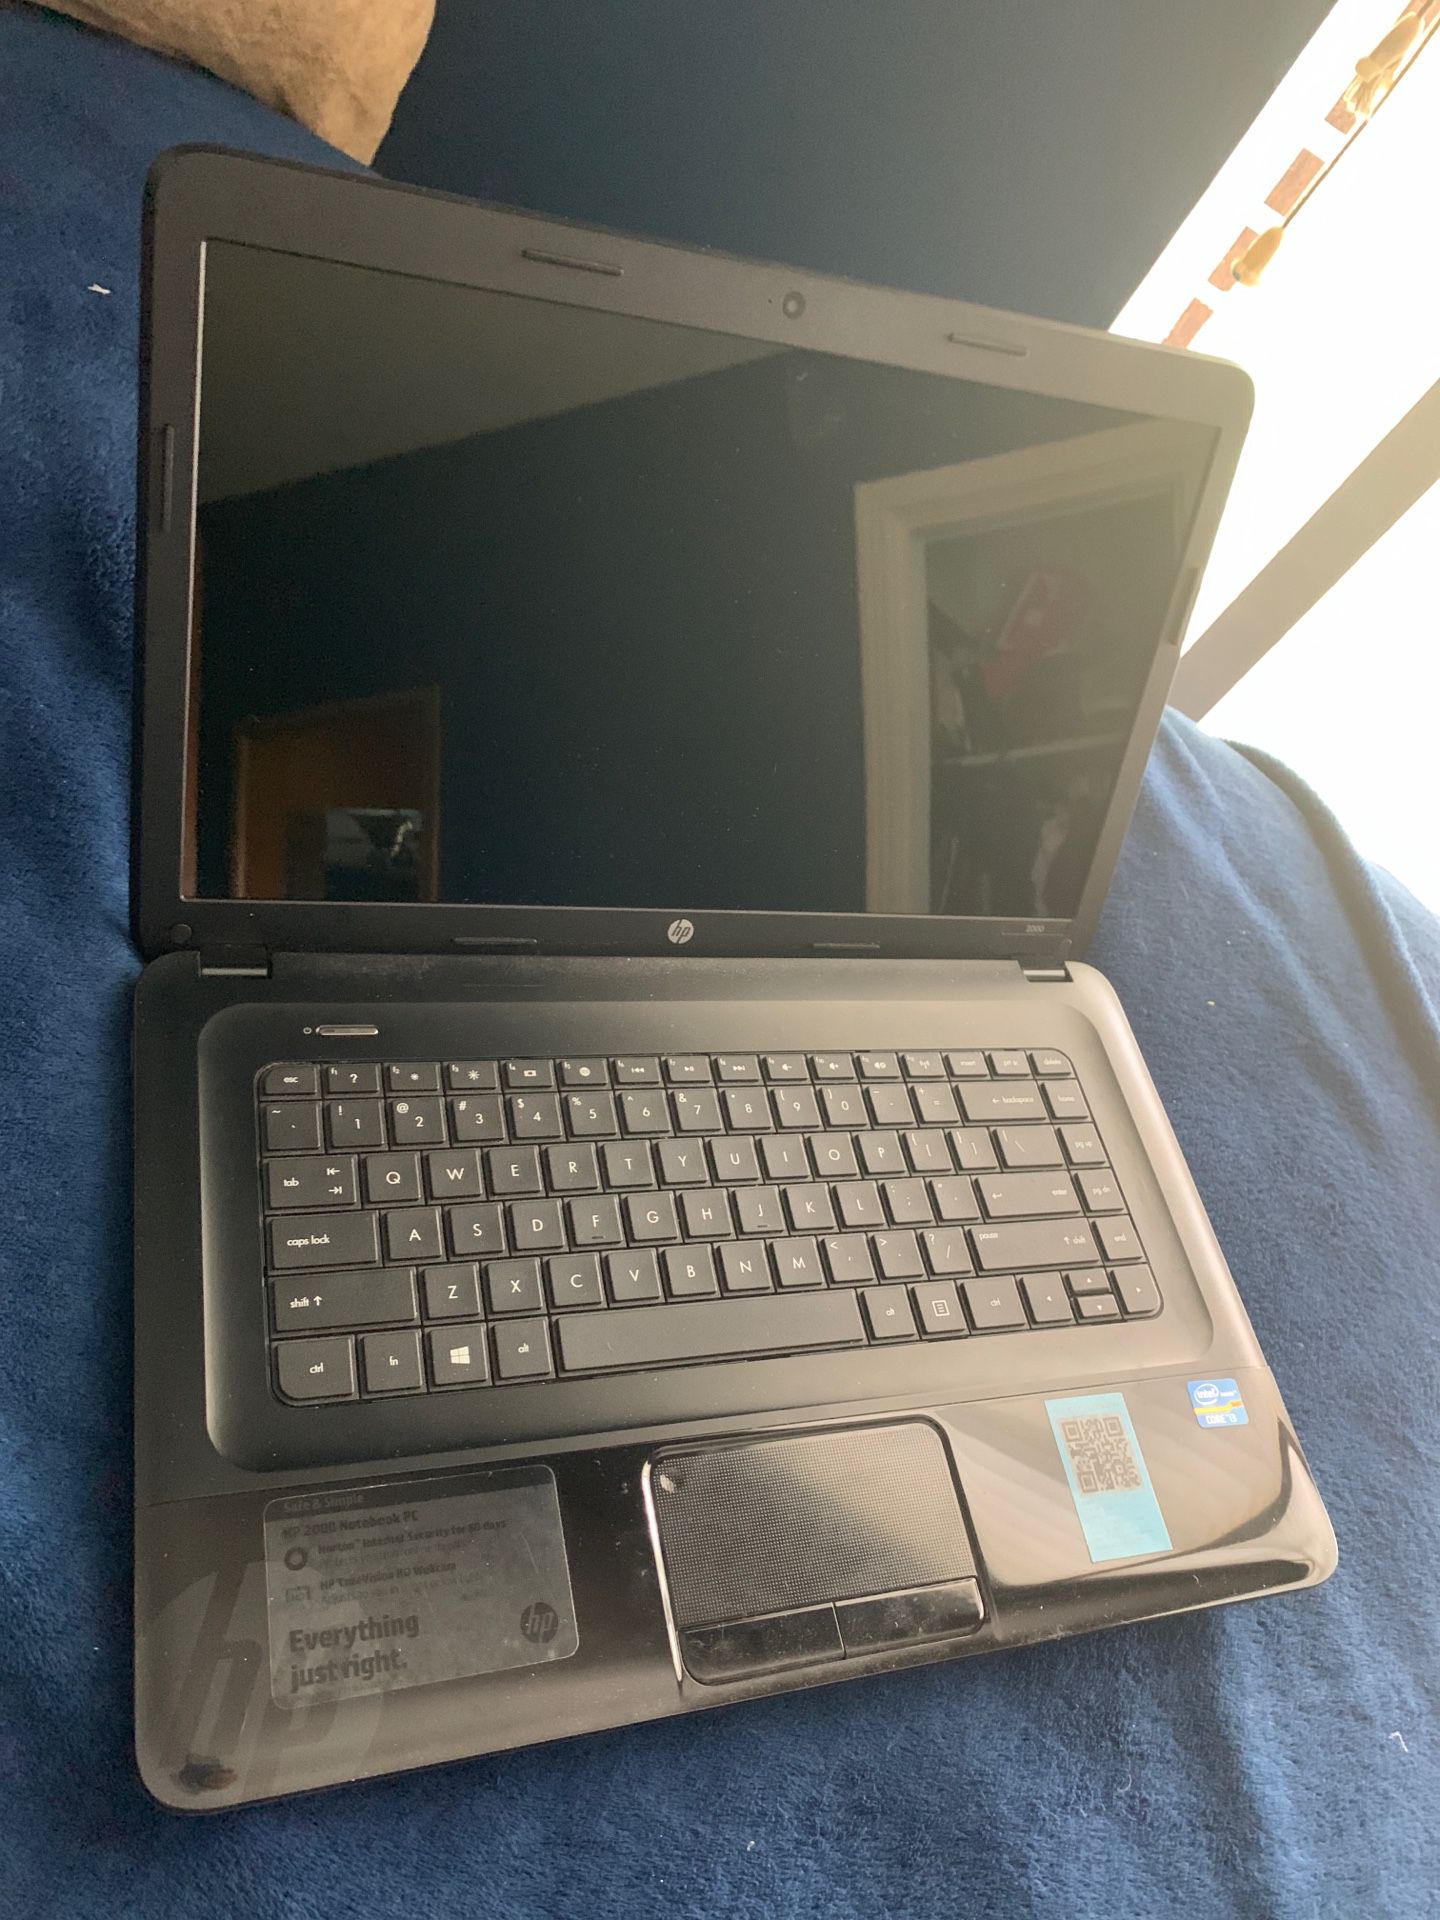 HP Notebook 2000 - 500 GB Hard Drive